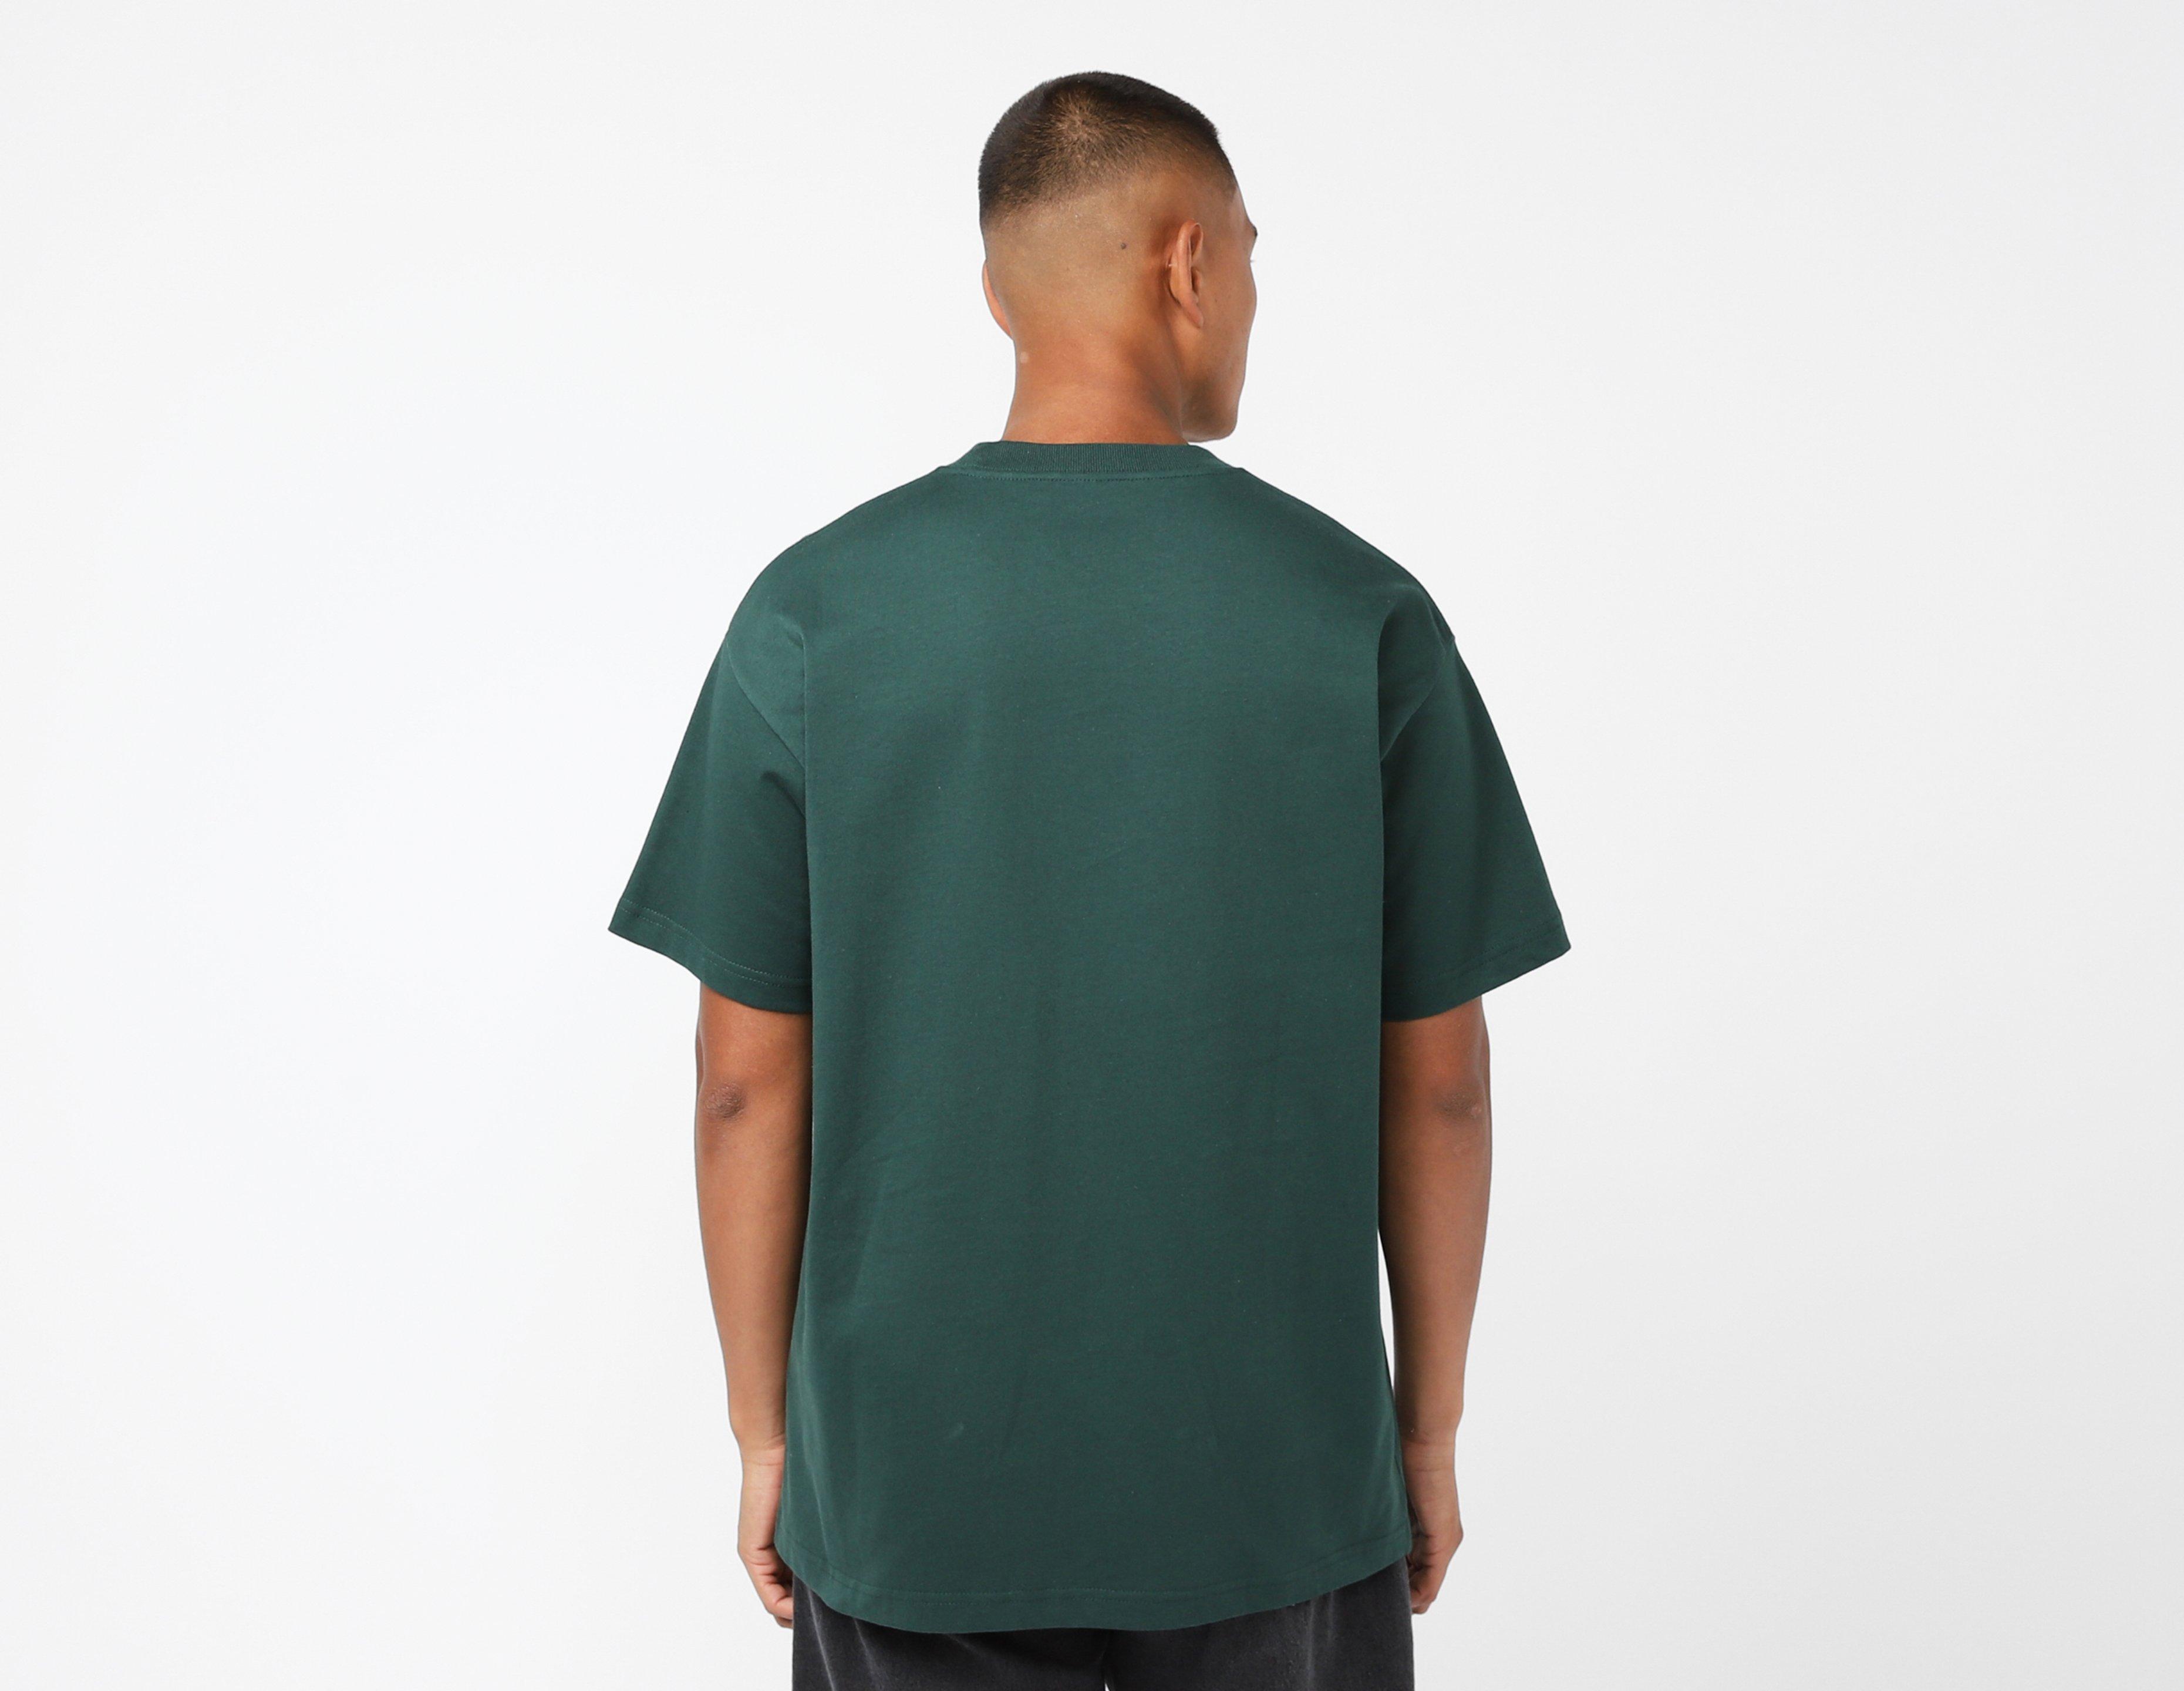 Shirt Ralph Carhartt - - Bubbles tommy drawstring | Healthdesign? T WIP hoodie hilfiger Green